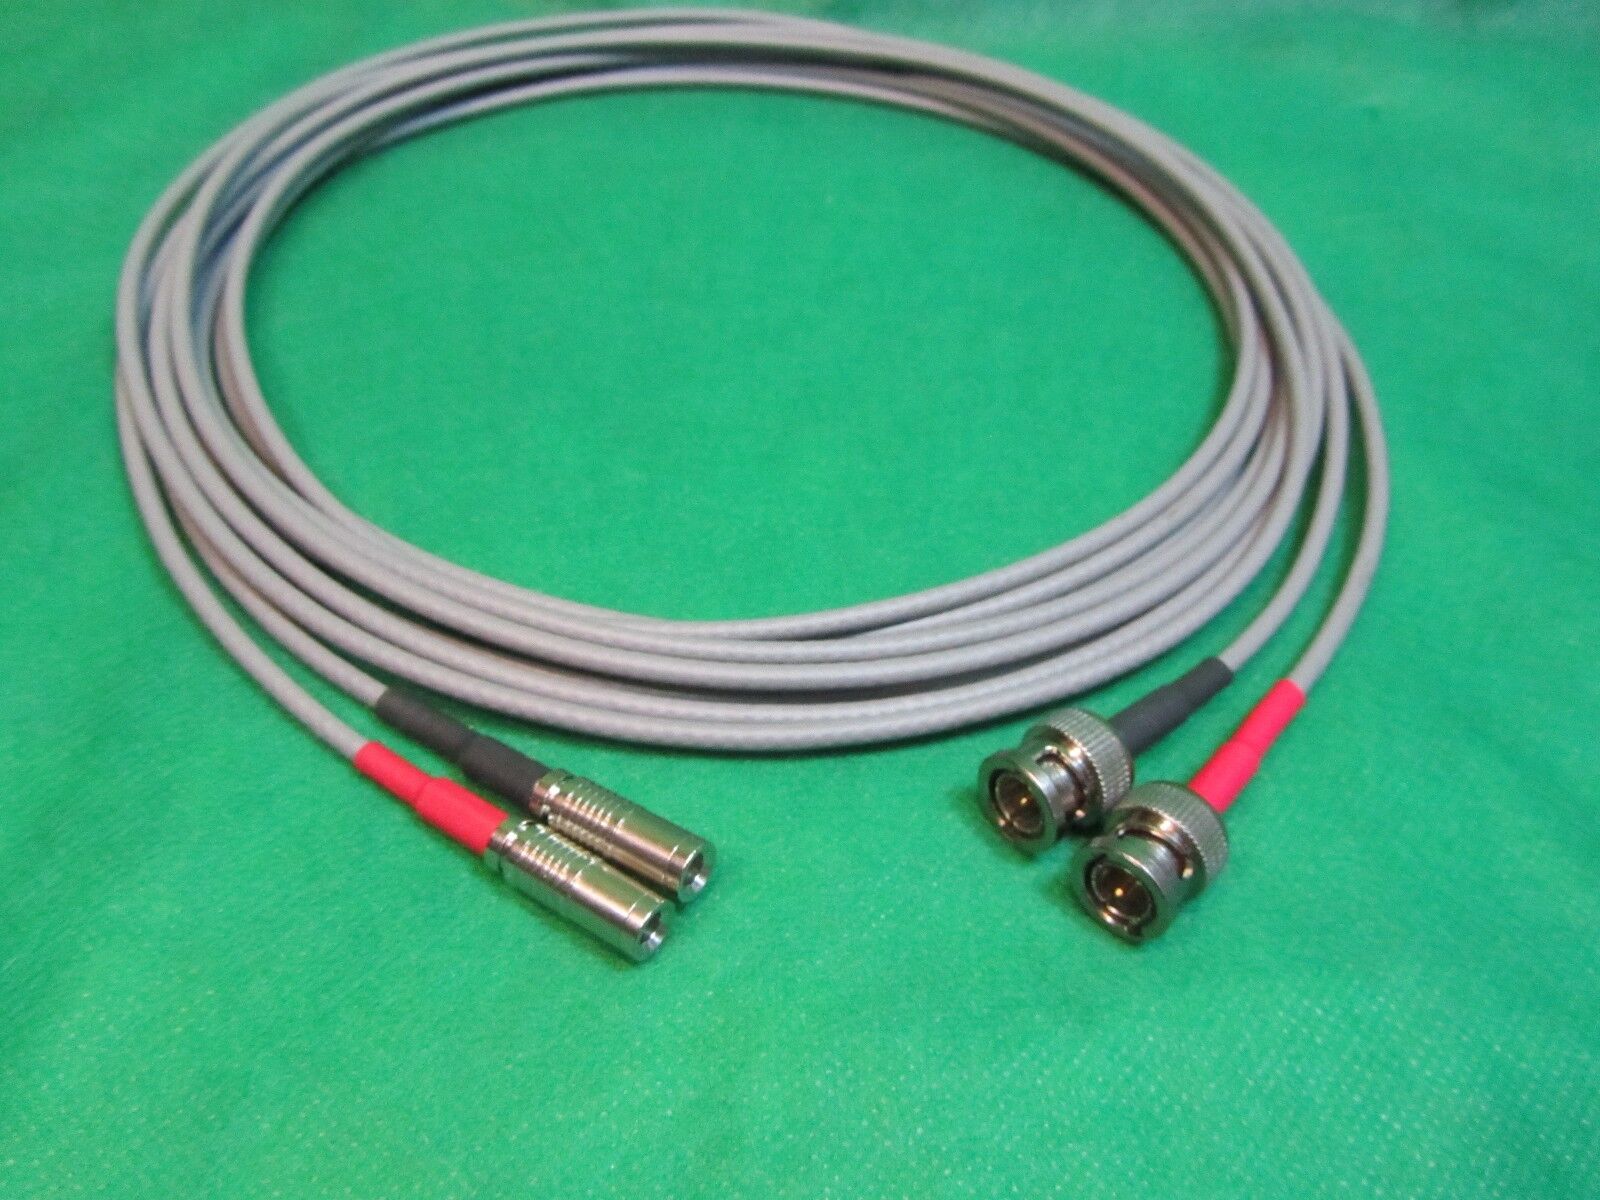  CISCO CAB-T3E3-RF-BNC-M= DUAL 735 COAX  1.0/2.3 Male to BNC Male Cable, 50 Ft.